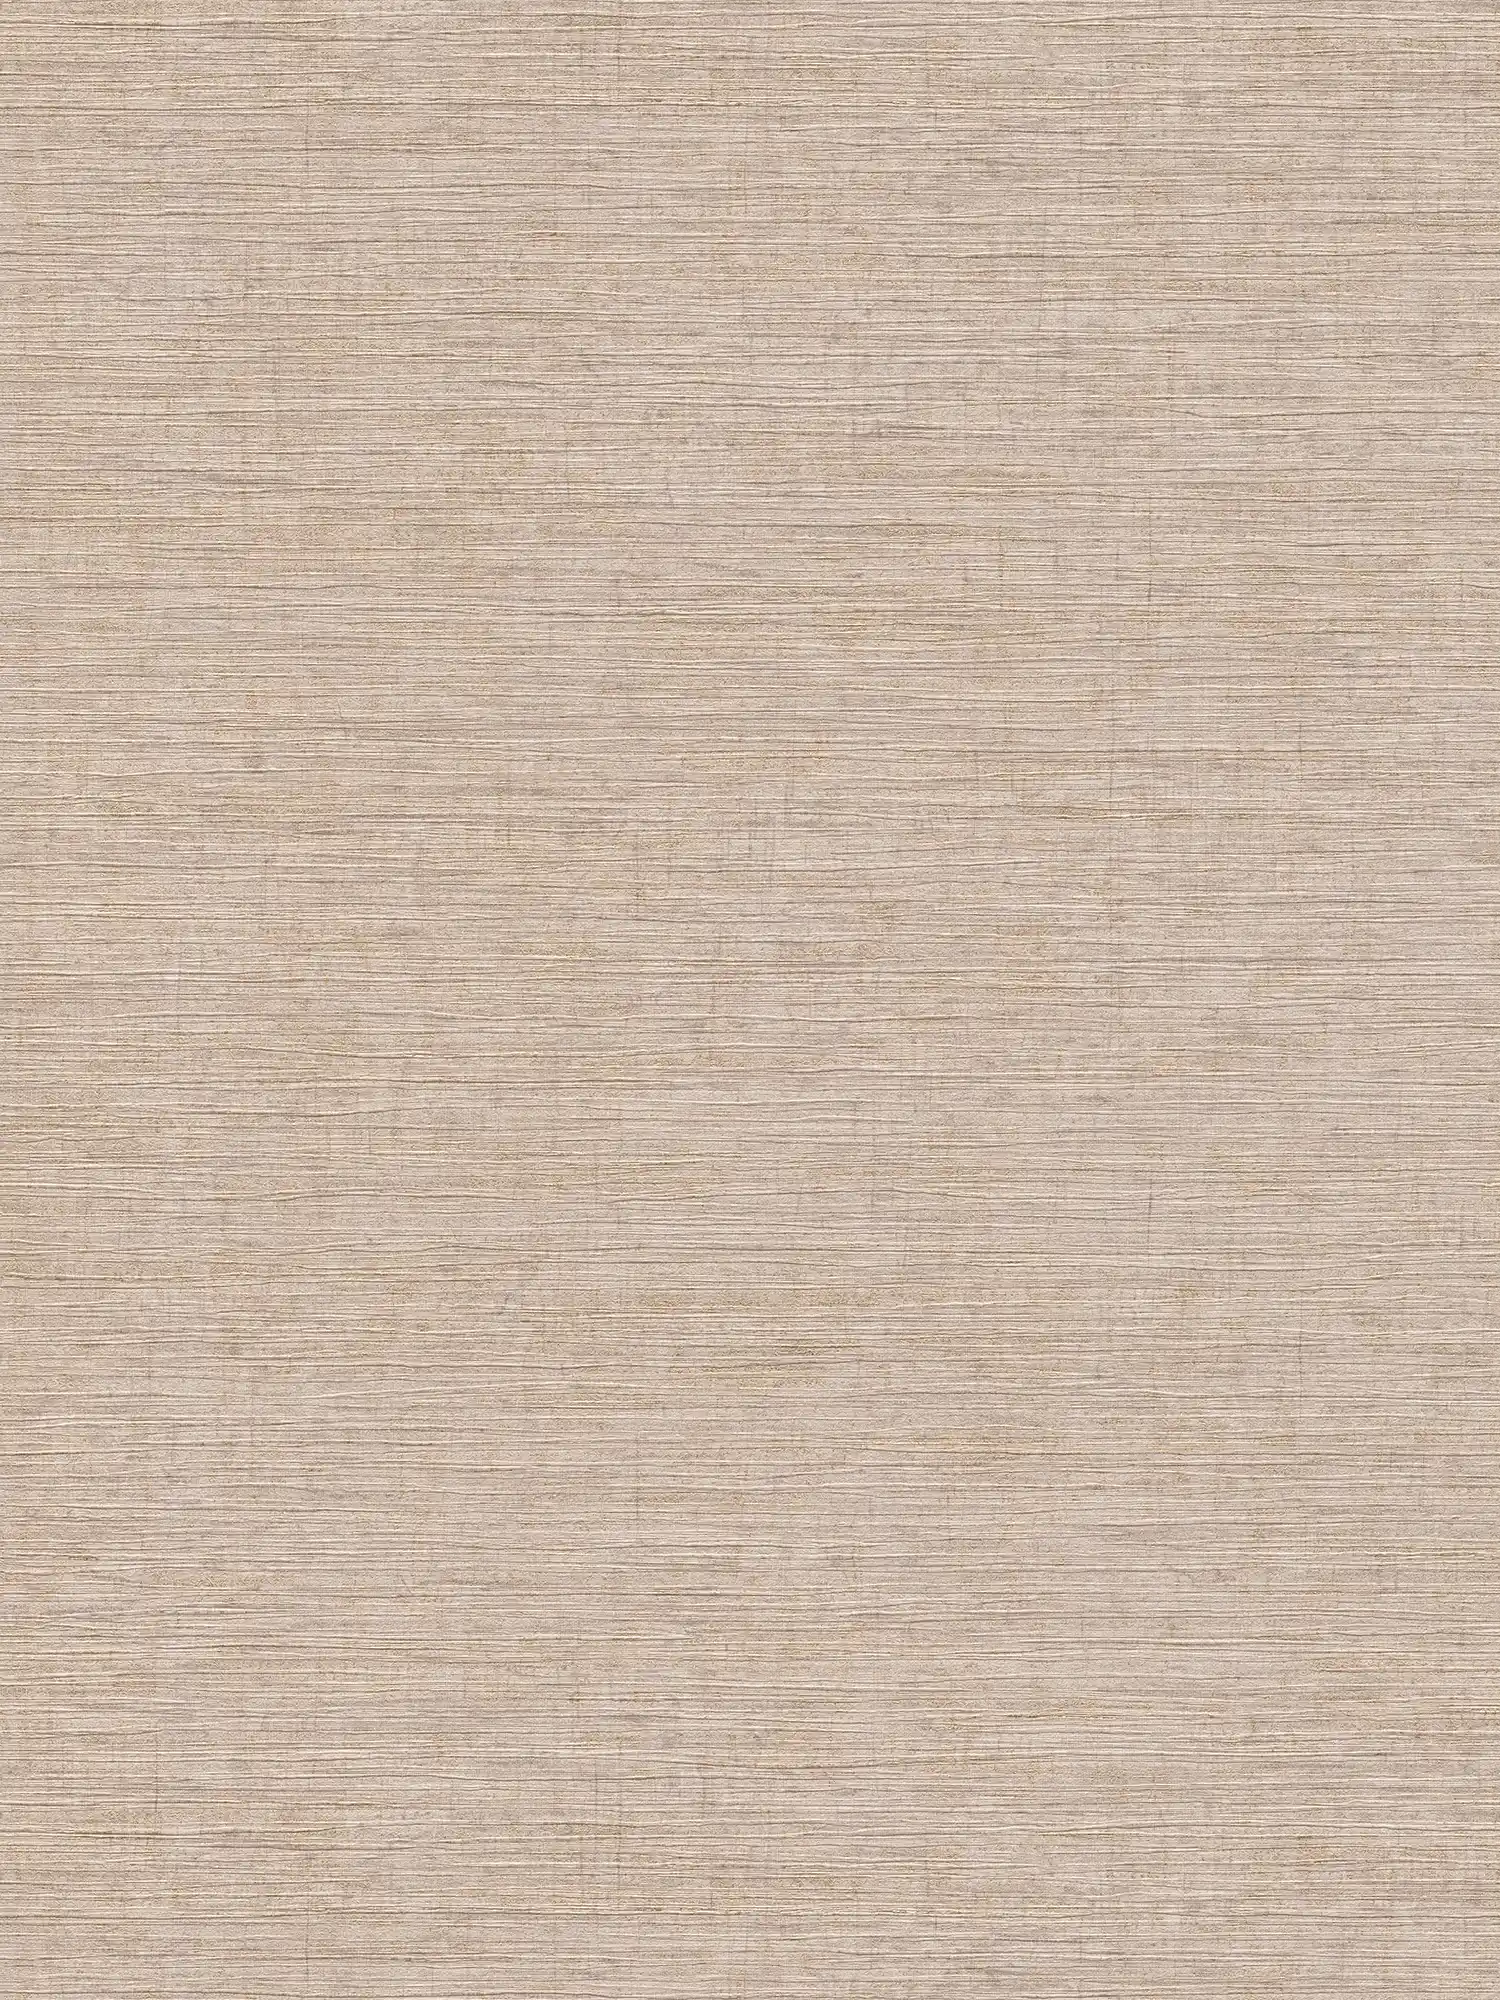 Plain wallpaper with embossed pattern - beige, metallic
